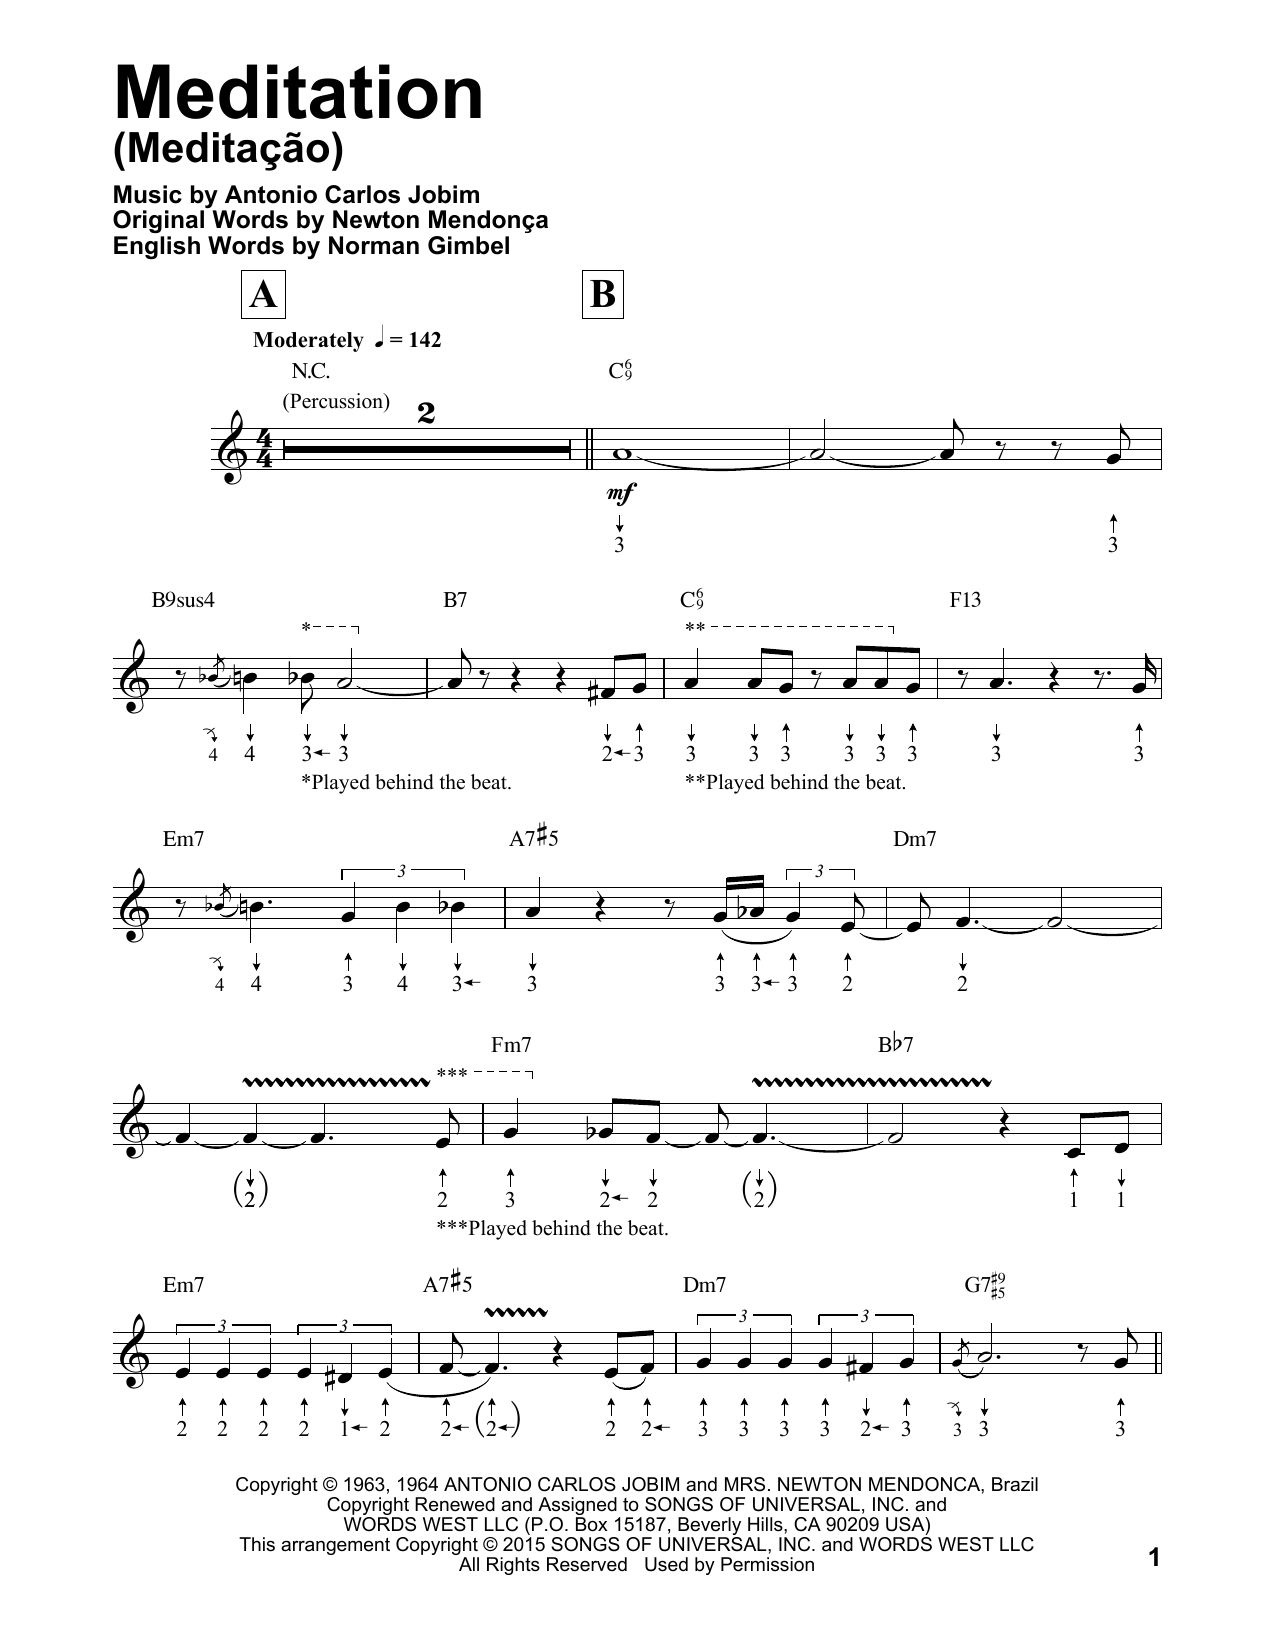 Antonio Carlos Jobim Meditation (Meditacao) (arr. Will Galison) Sheet Music Notes & Chords for Harmonica - Download or Print PDF